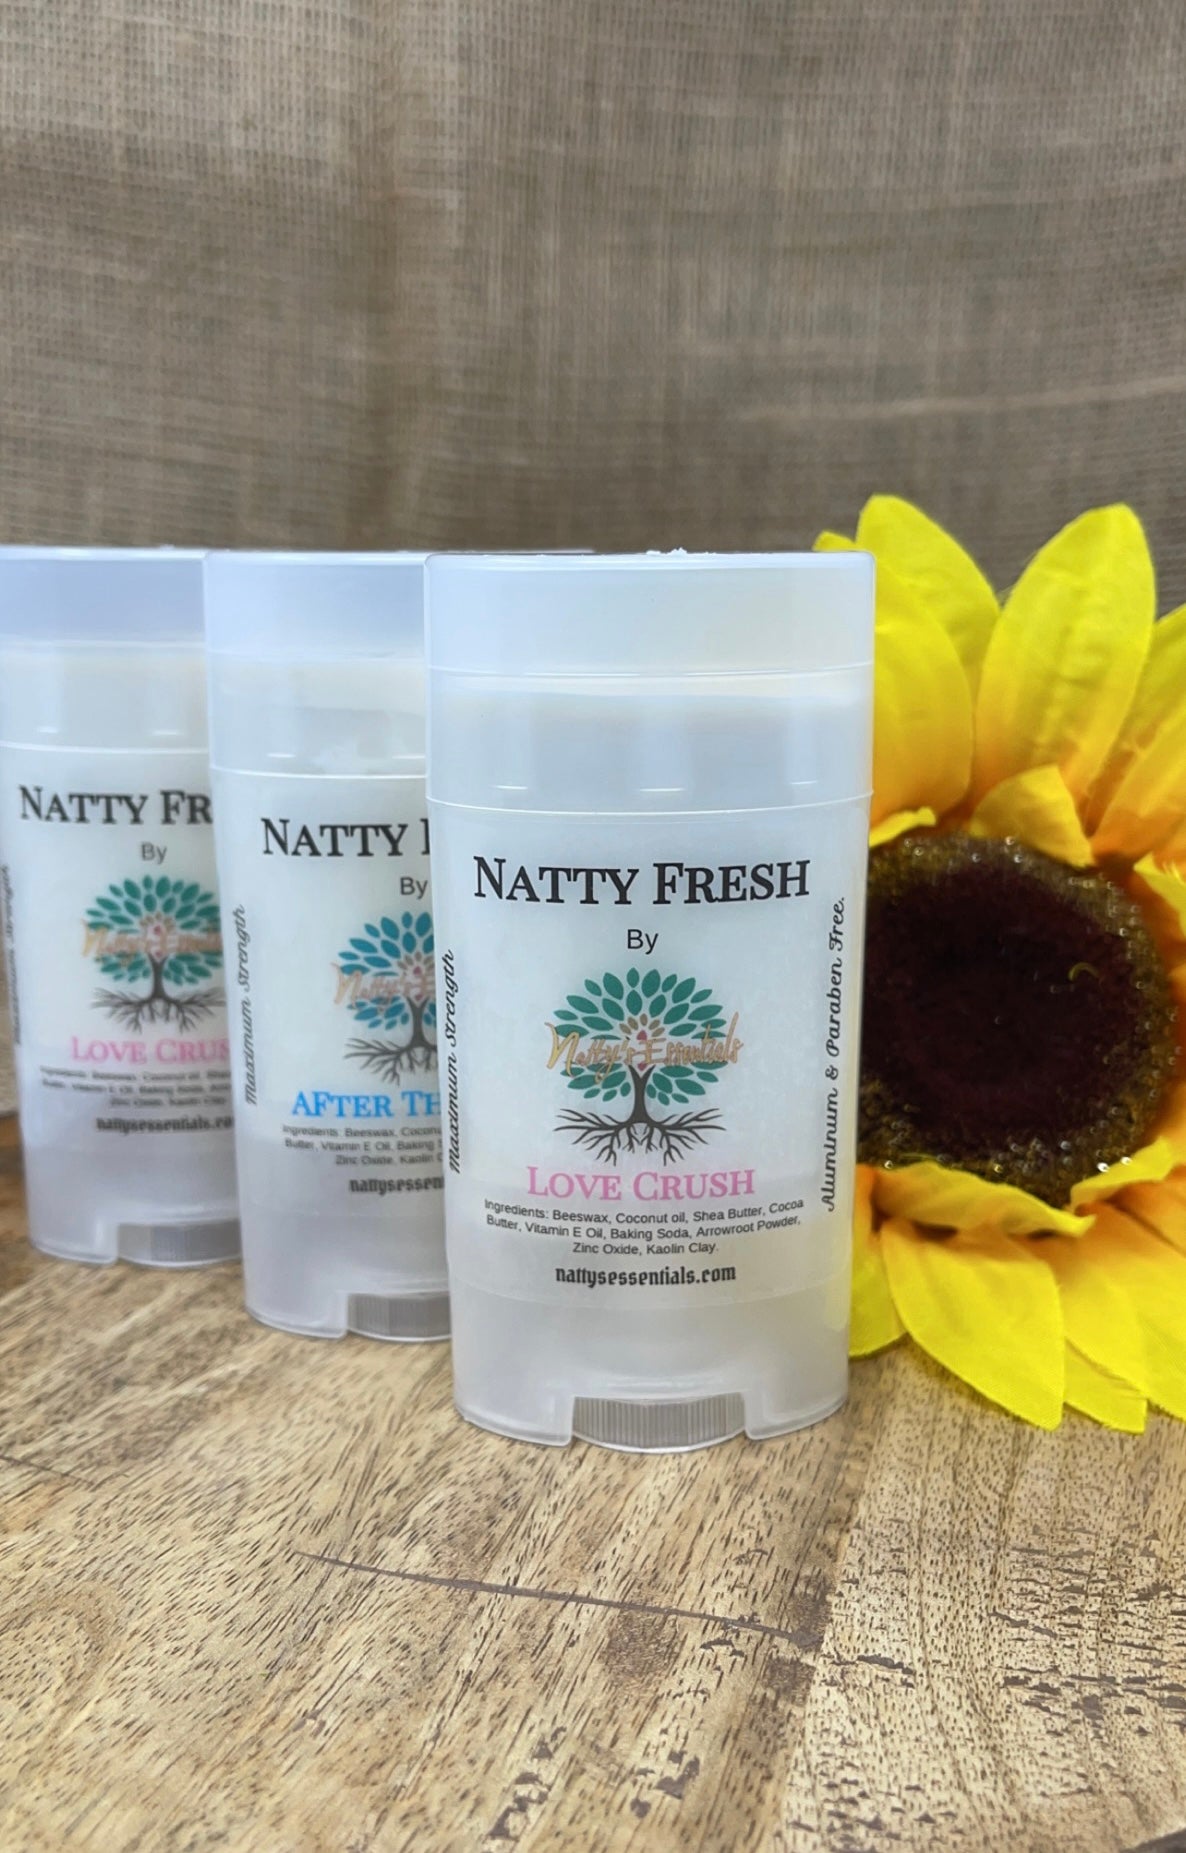 'Natty Fresh' All-Natural Deodorant